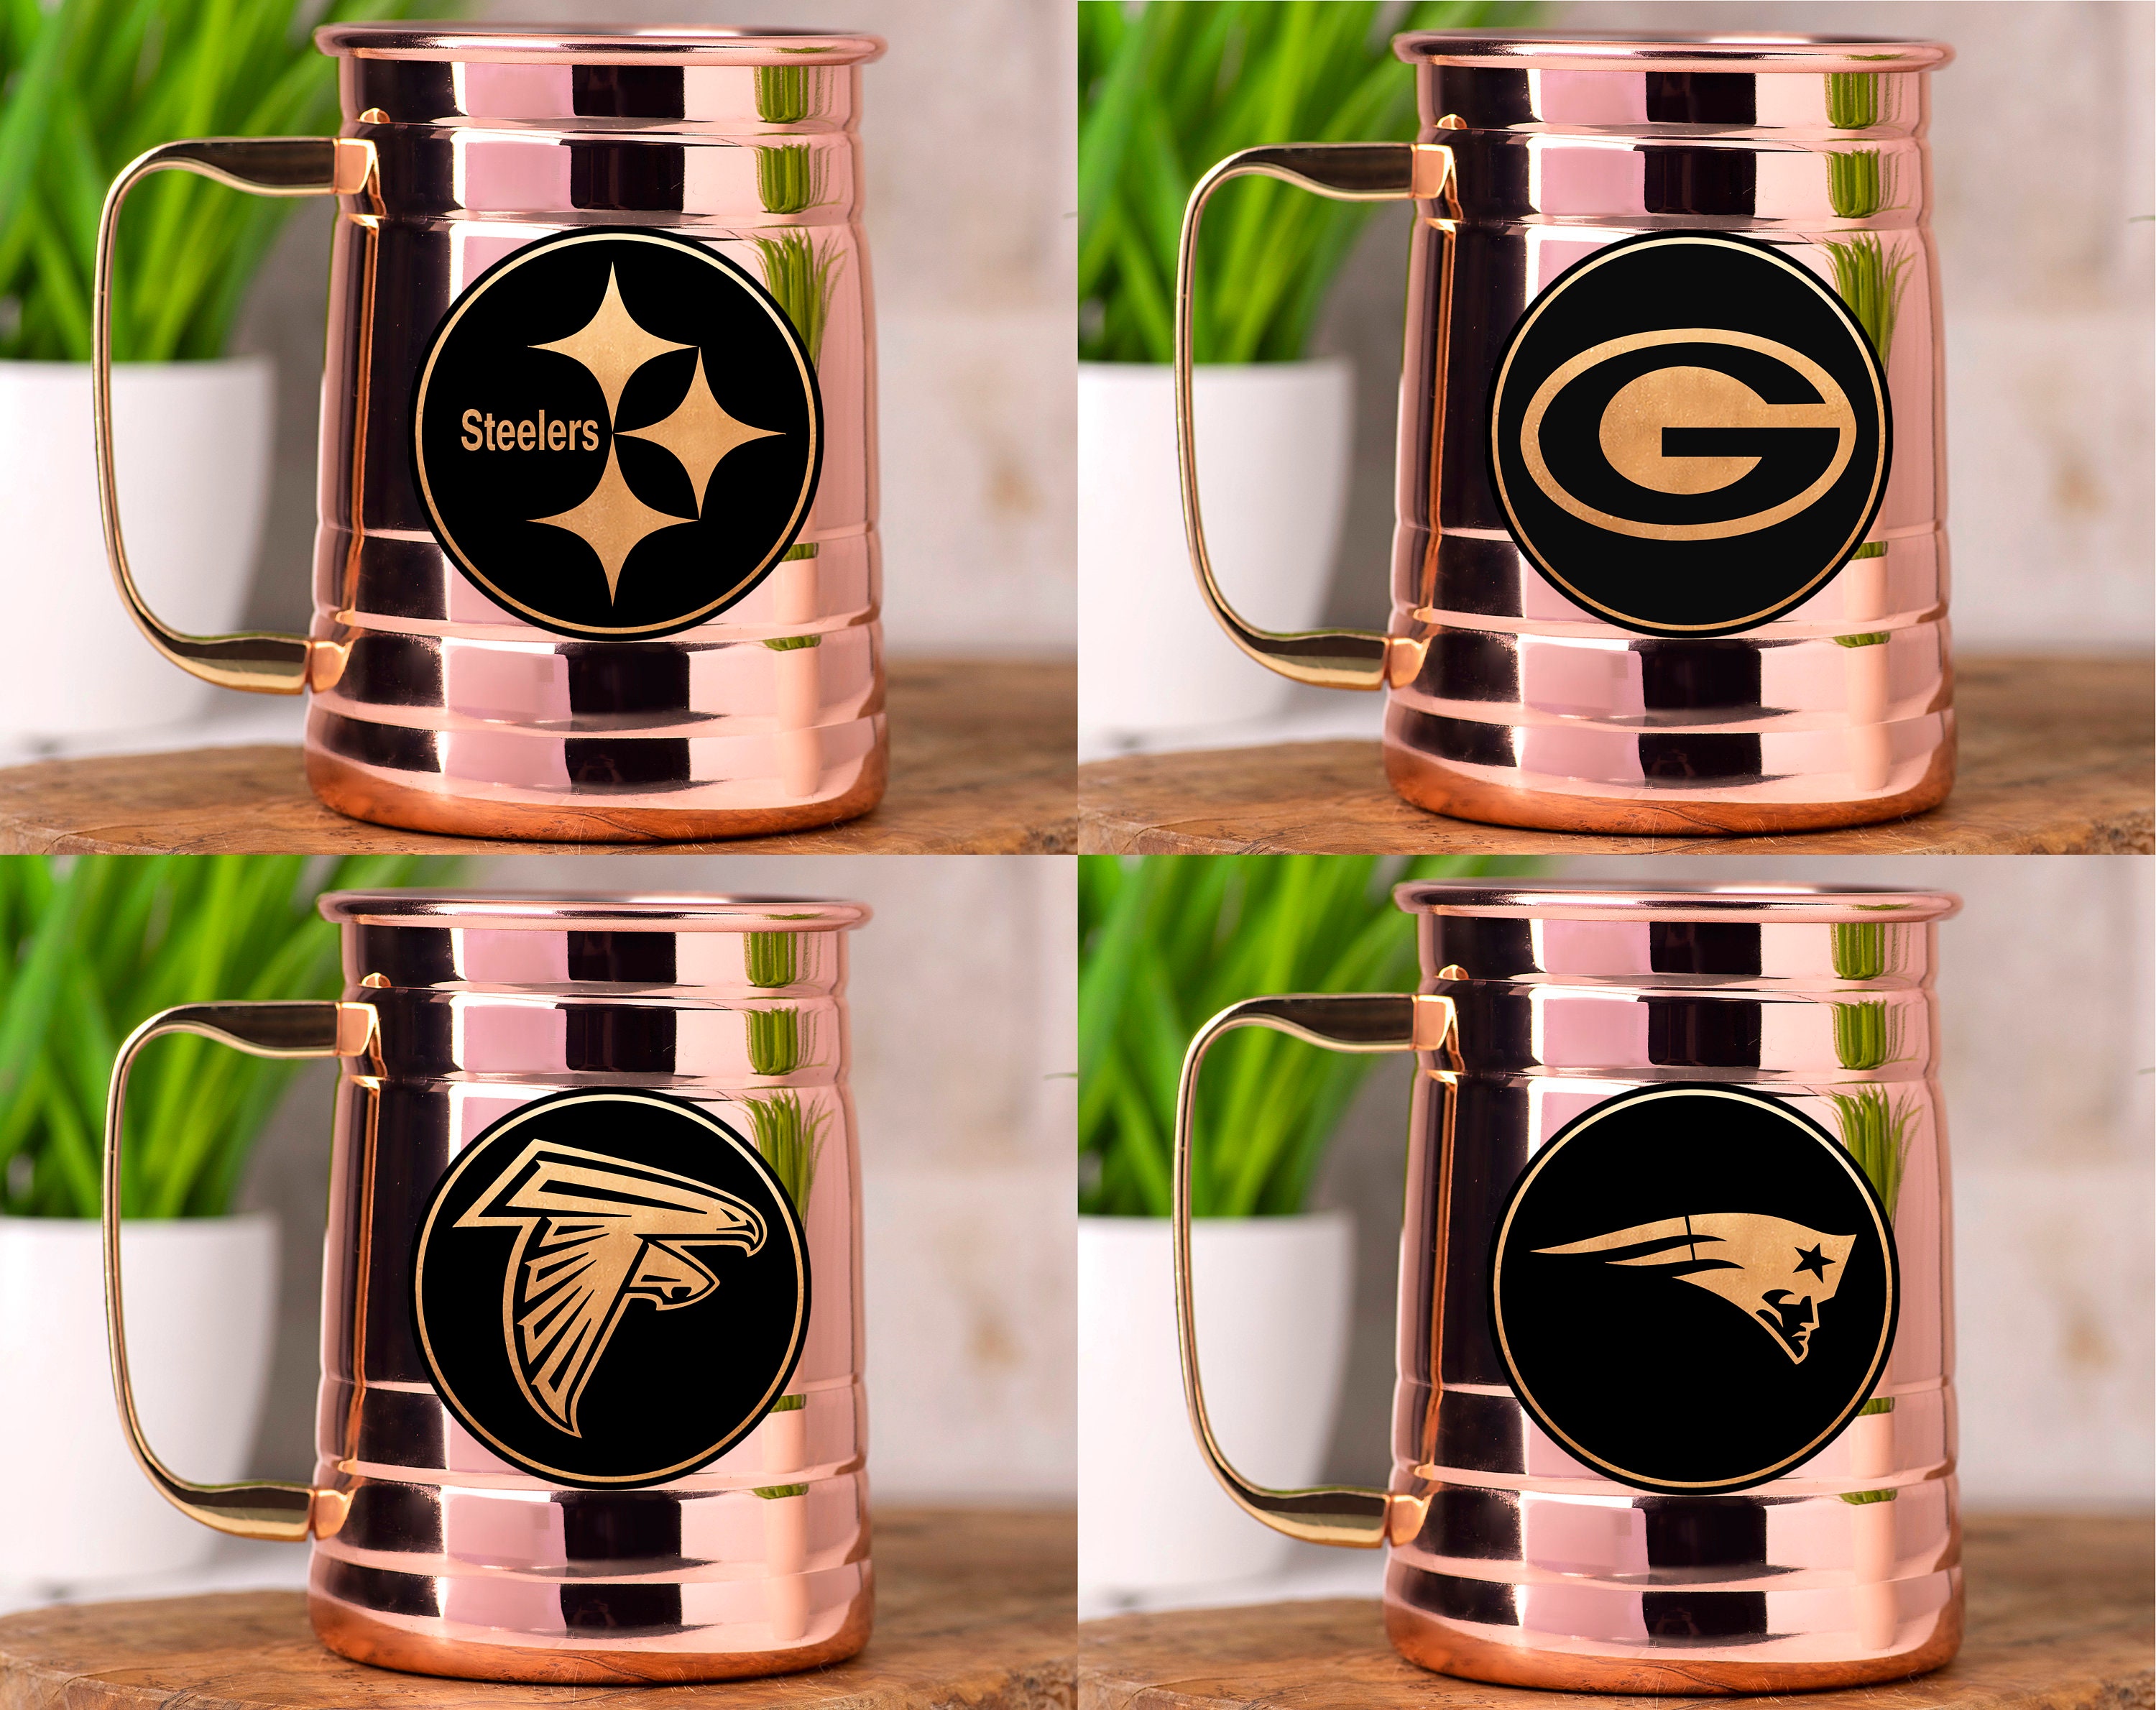 Las Vegas Raiders 11oz. Ceramic Coffee Cup & Leather Keychain Gift Set